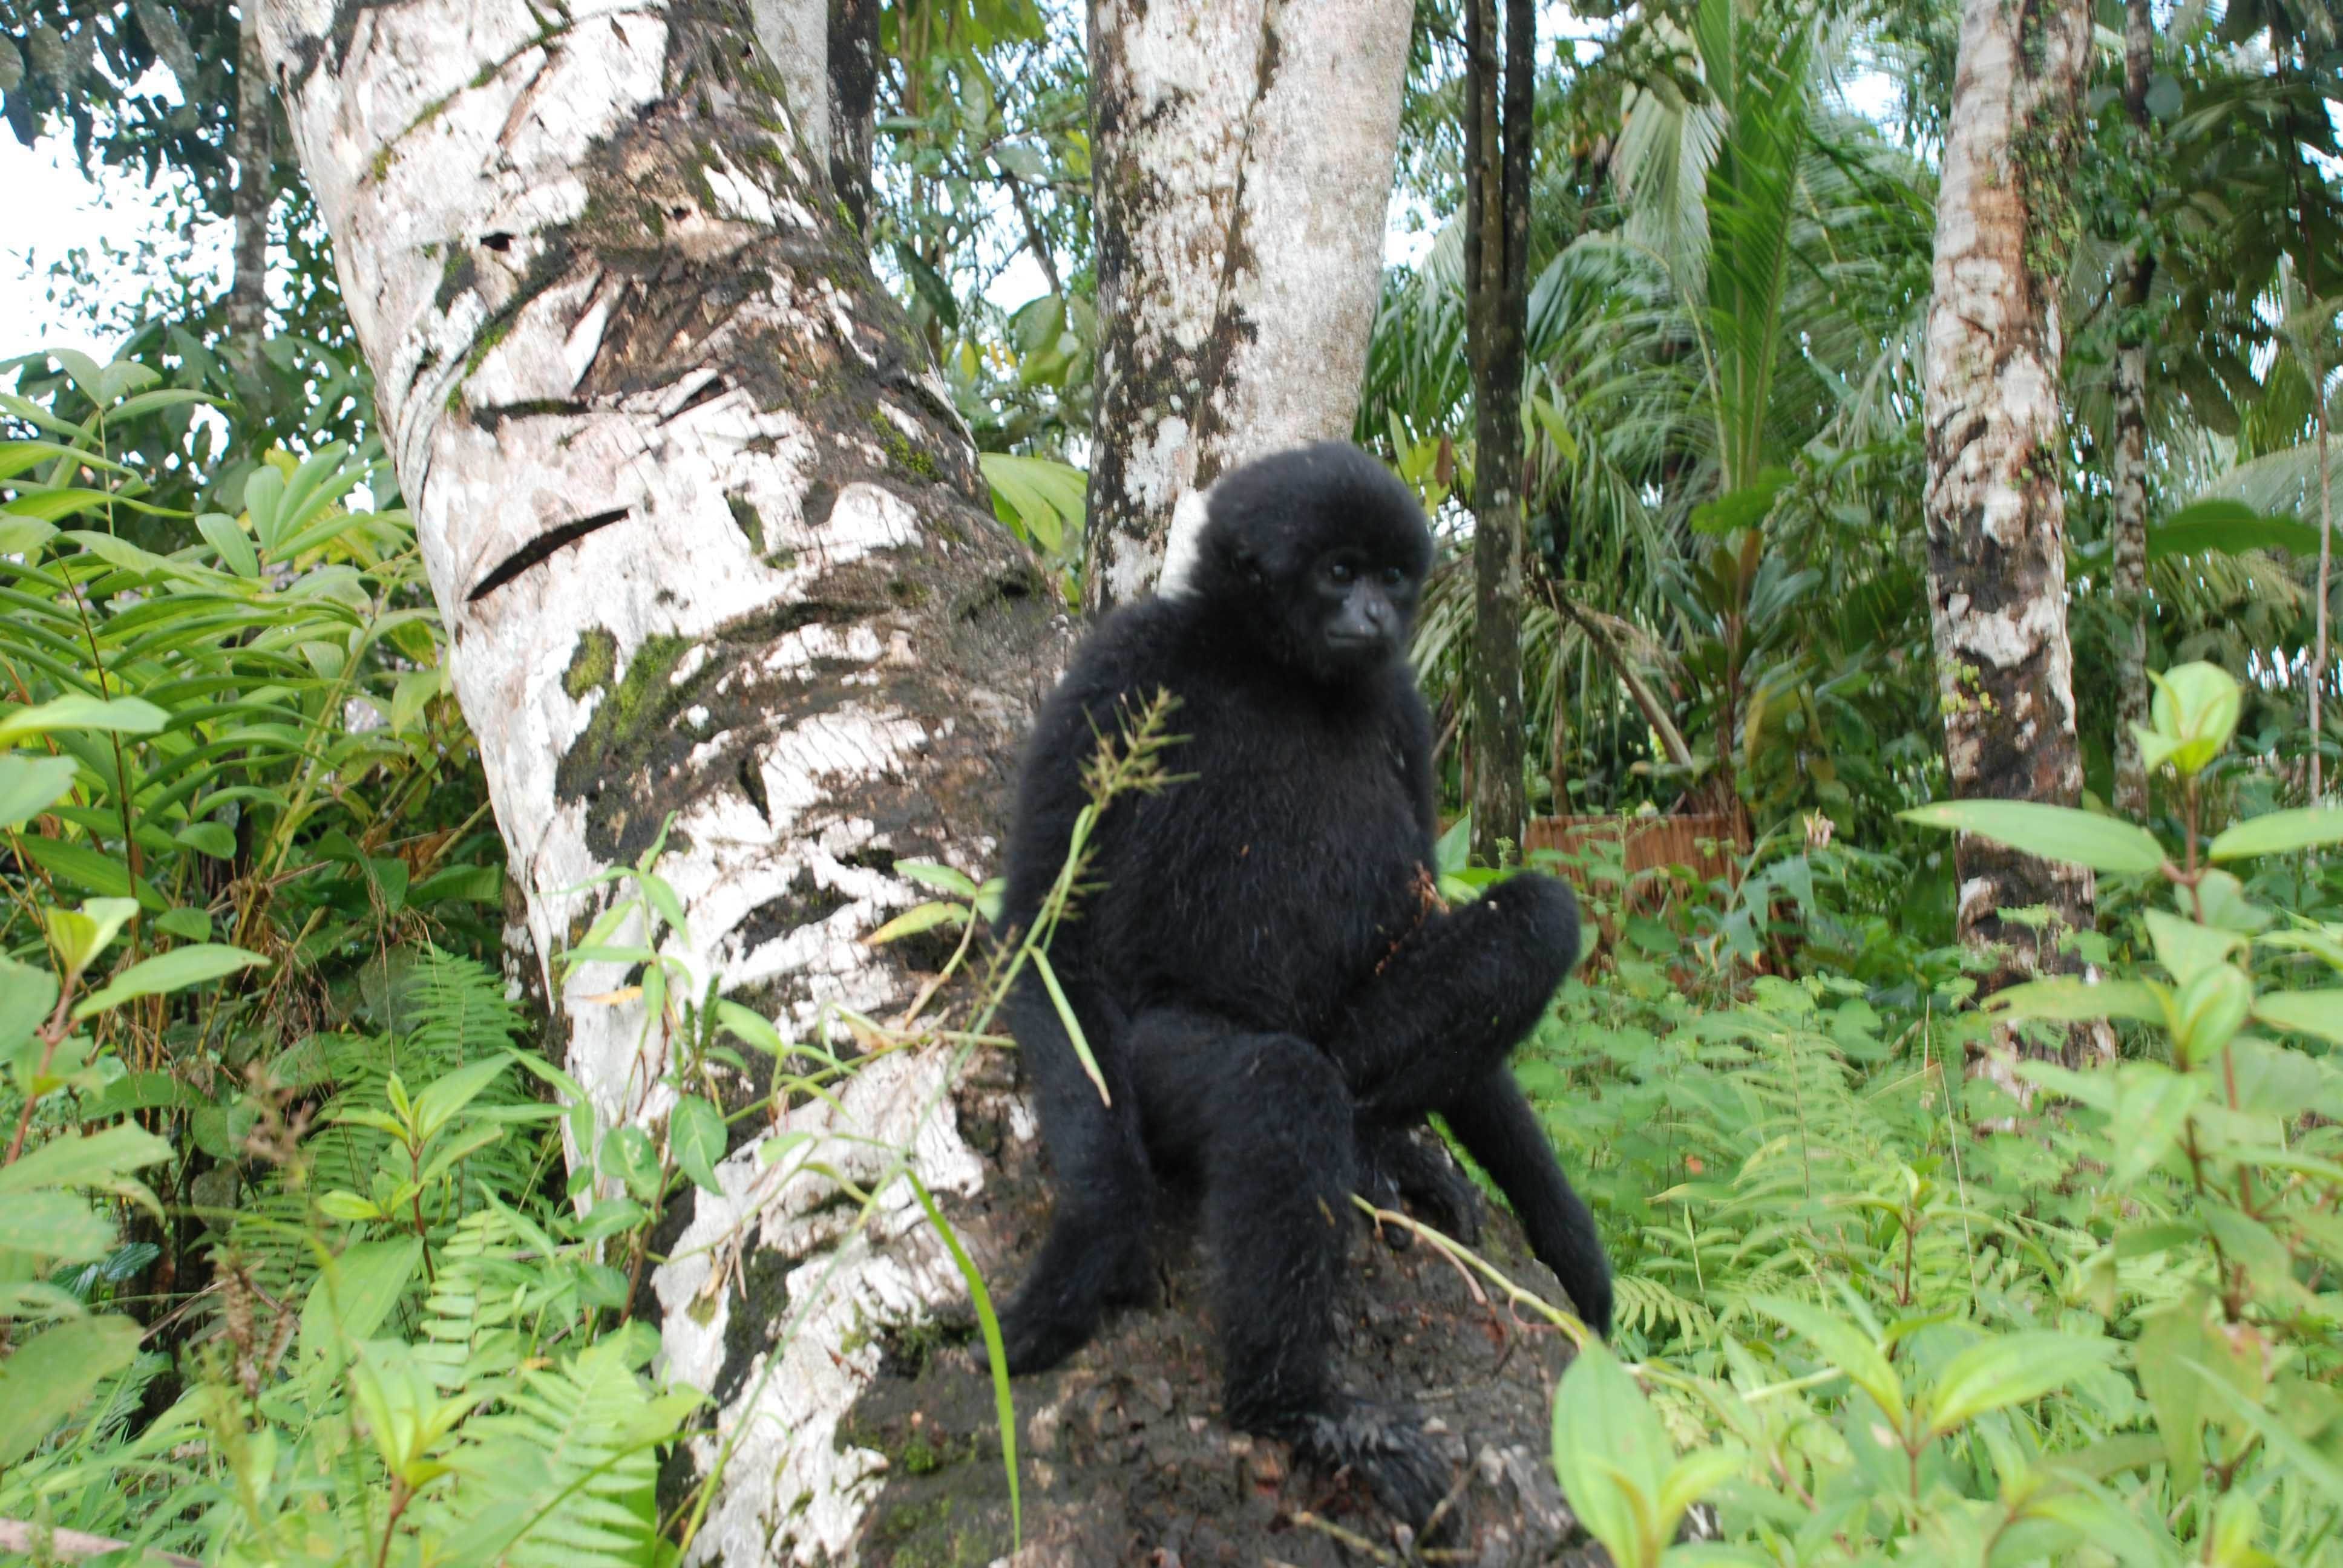 Bilou (Hylobates closii) endemic Mentawai primates. Image by Febrianti. Indonesia, 2020.